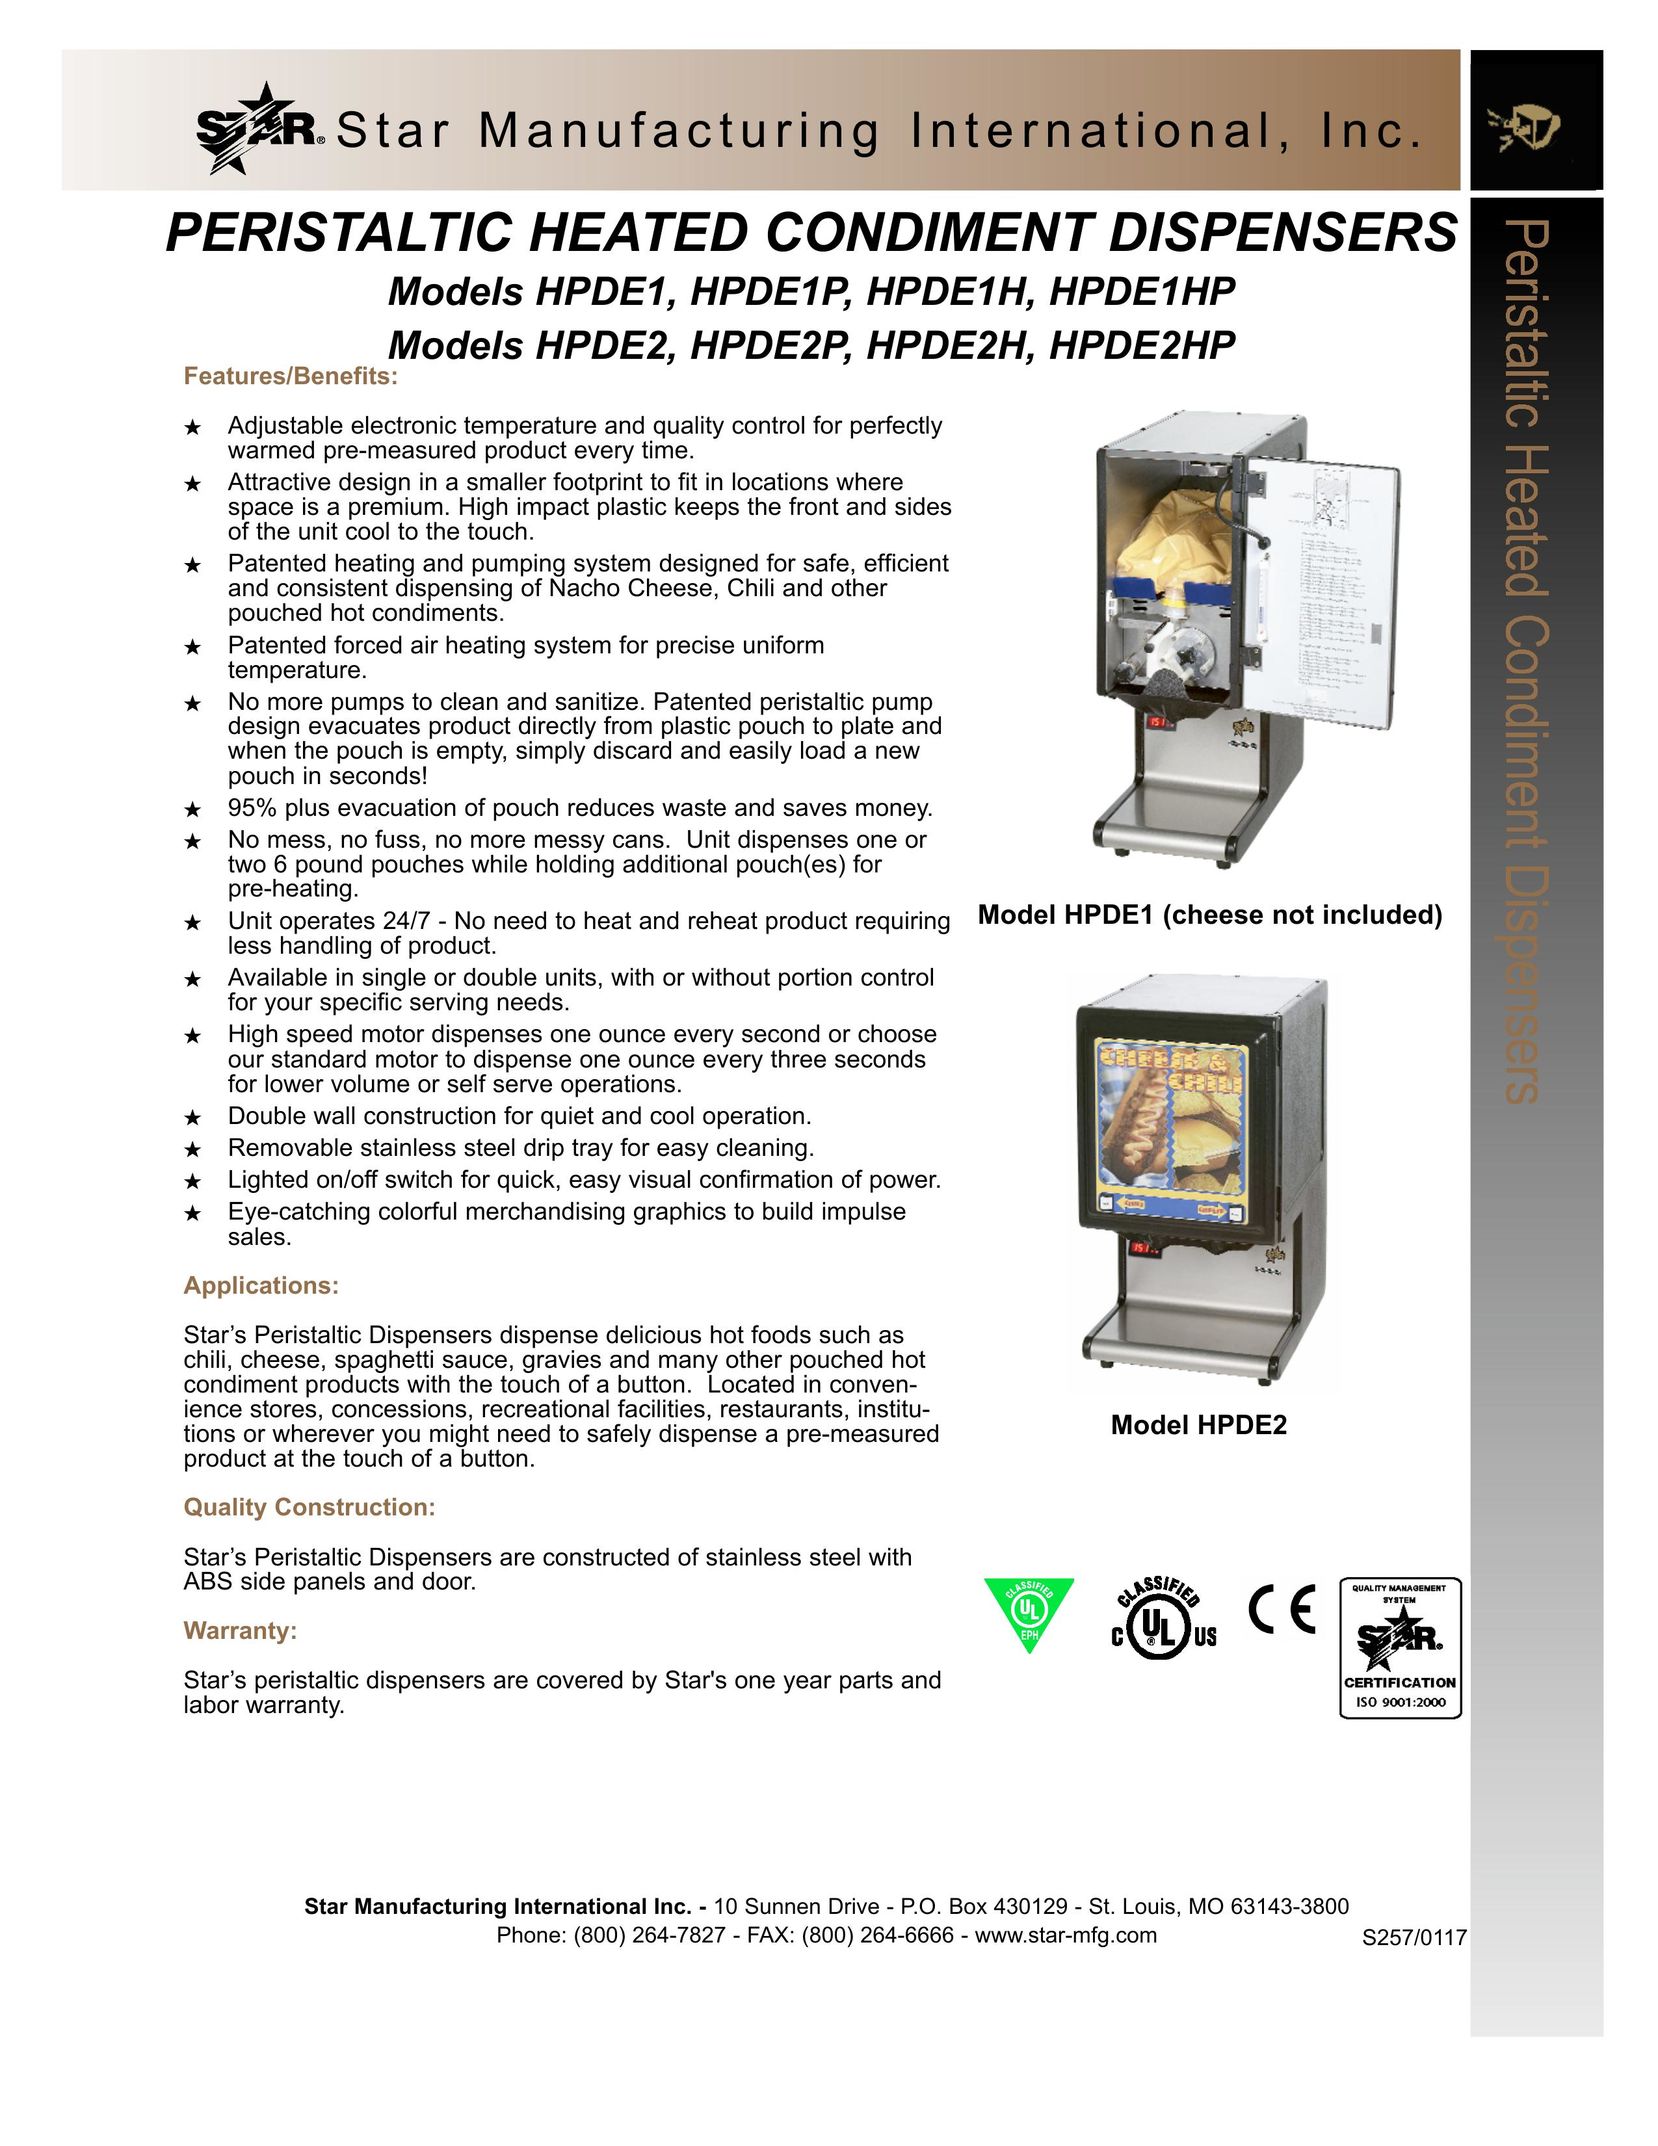 Star Manufacturing HPDE2P Beverage Dispenser User Manual